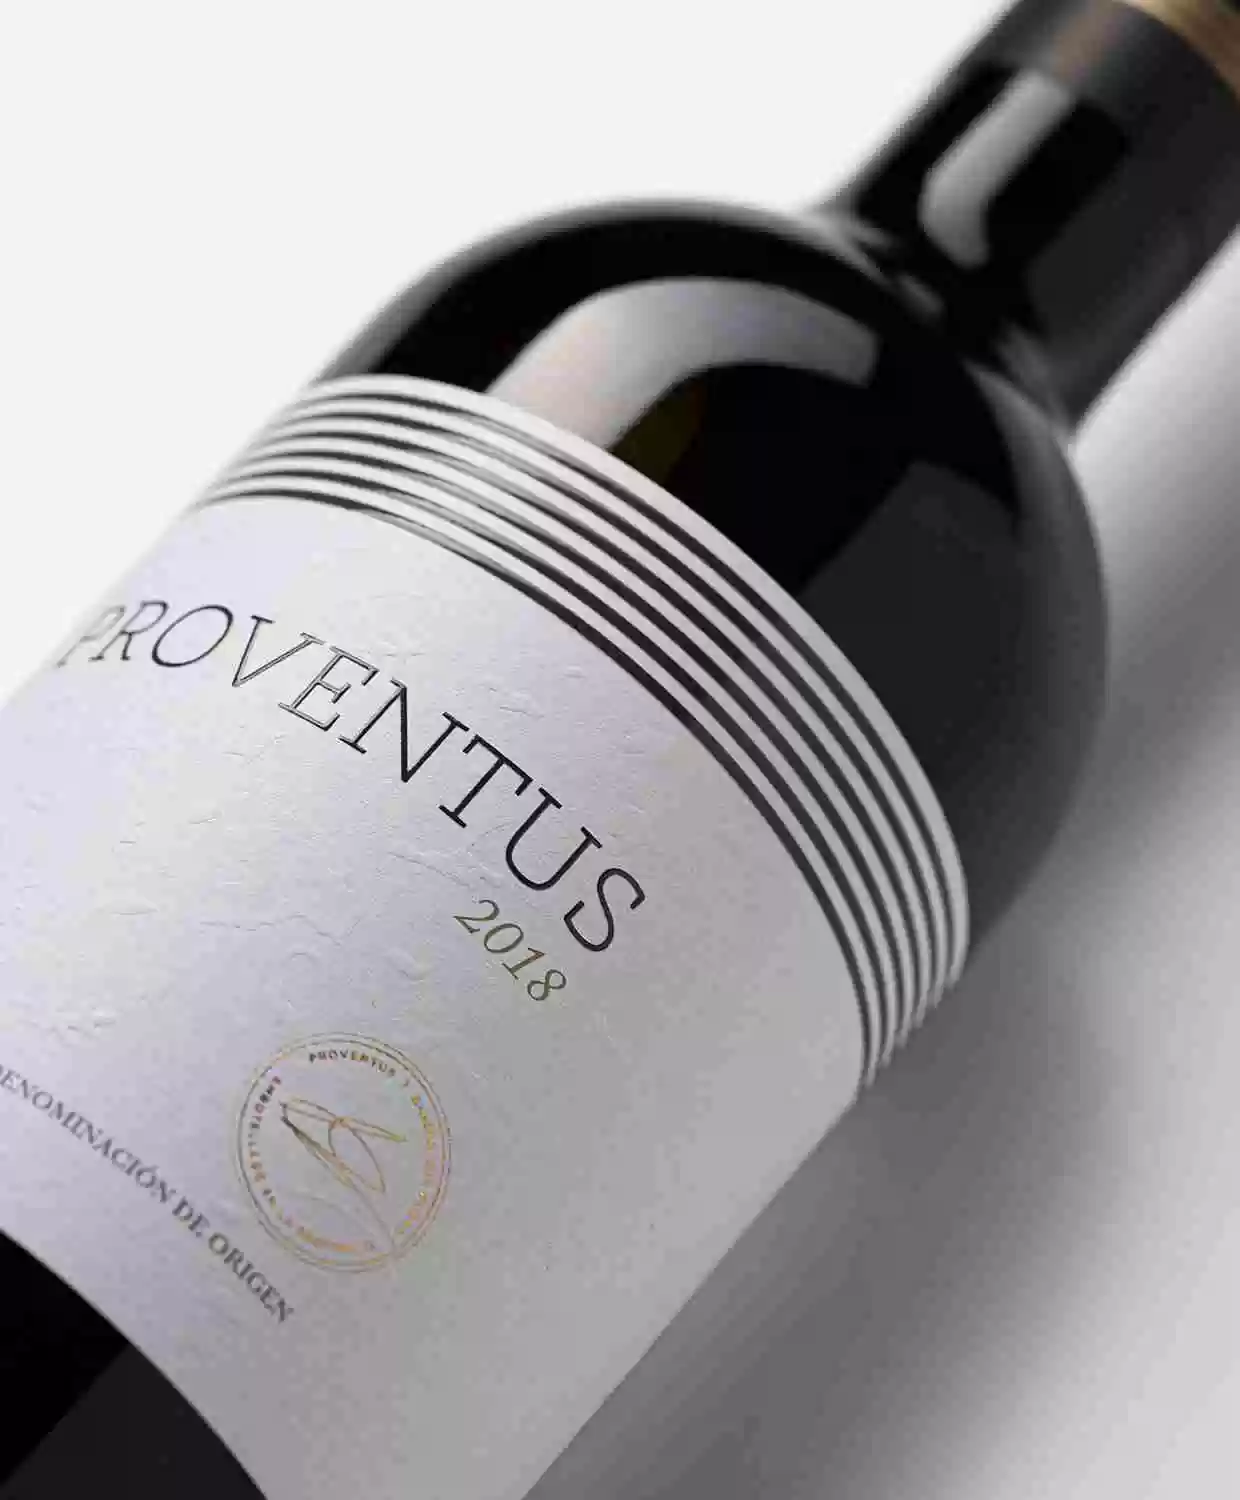 Proventus 2018, diseño de etiqueta de vino